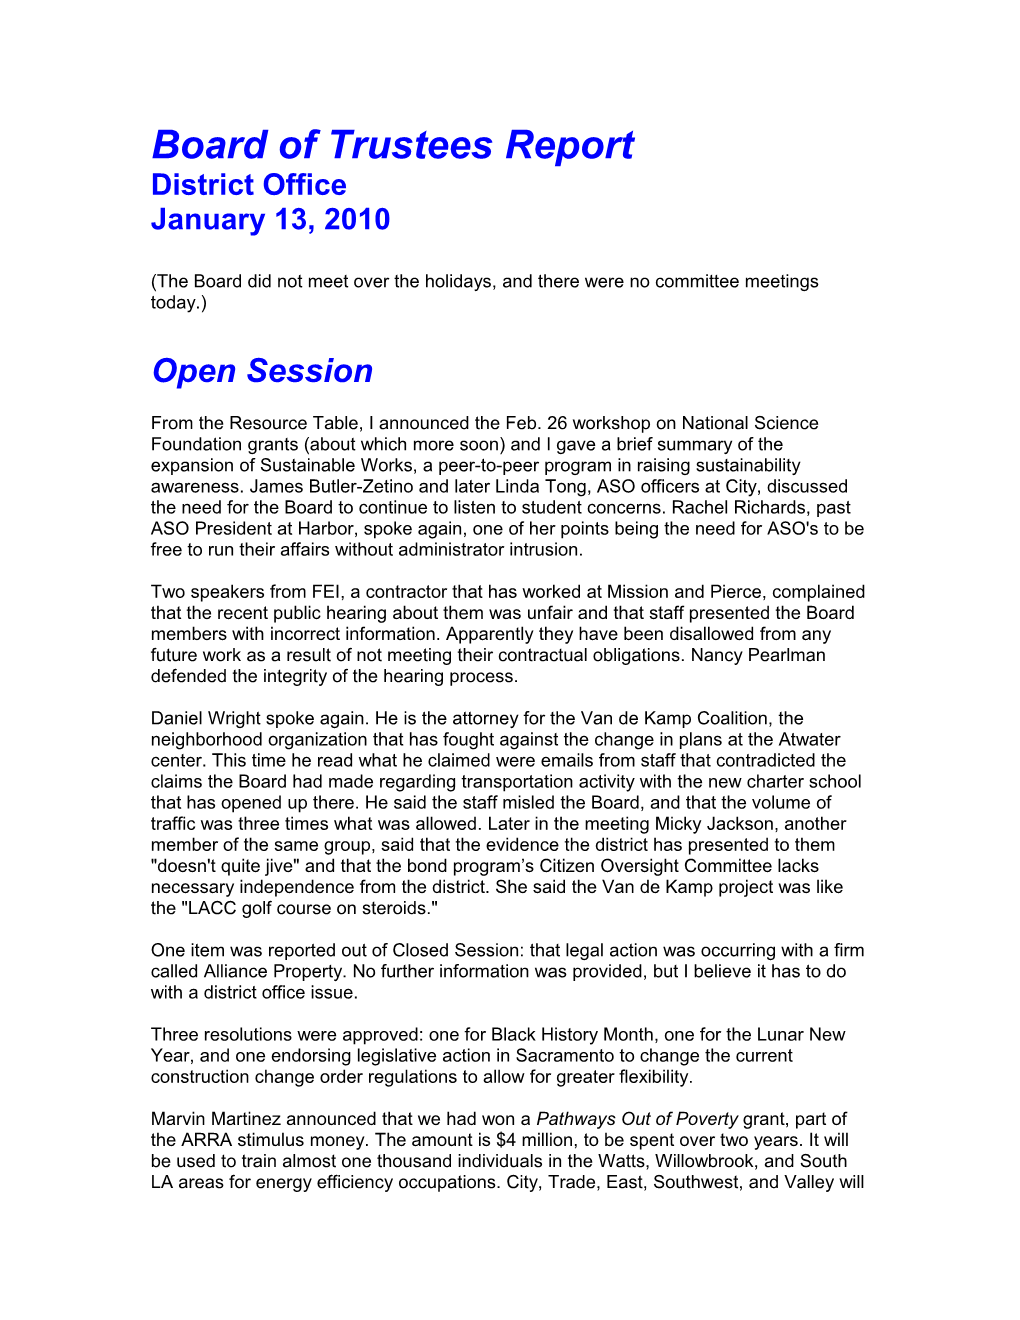 Board of Trustees Report s4